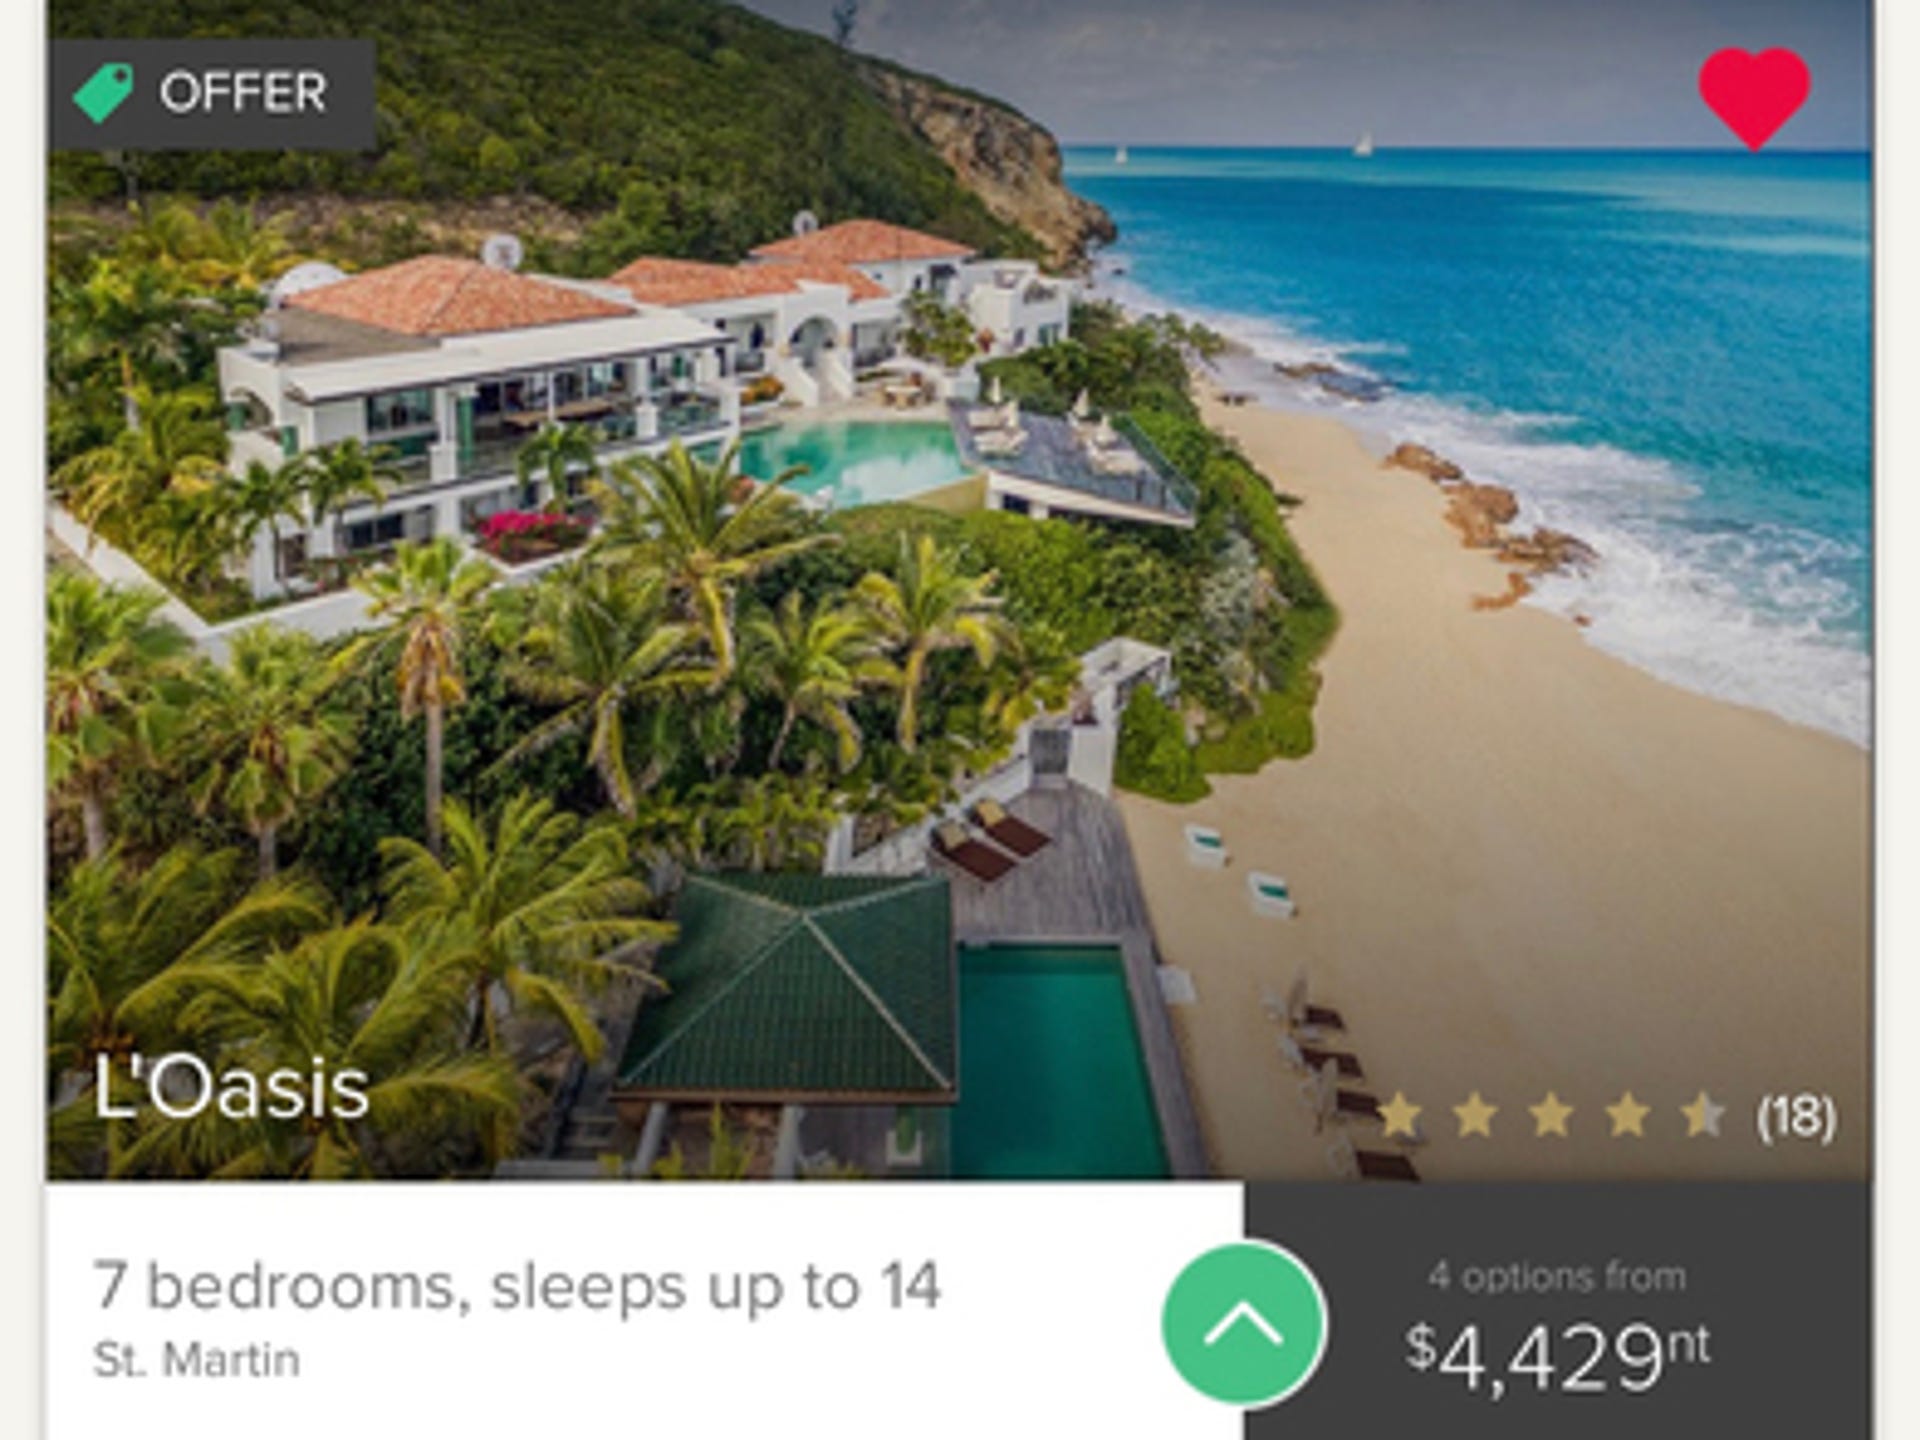 luxury-retreats-screenshot.jpg